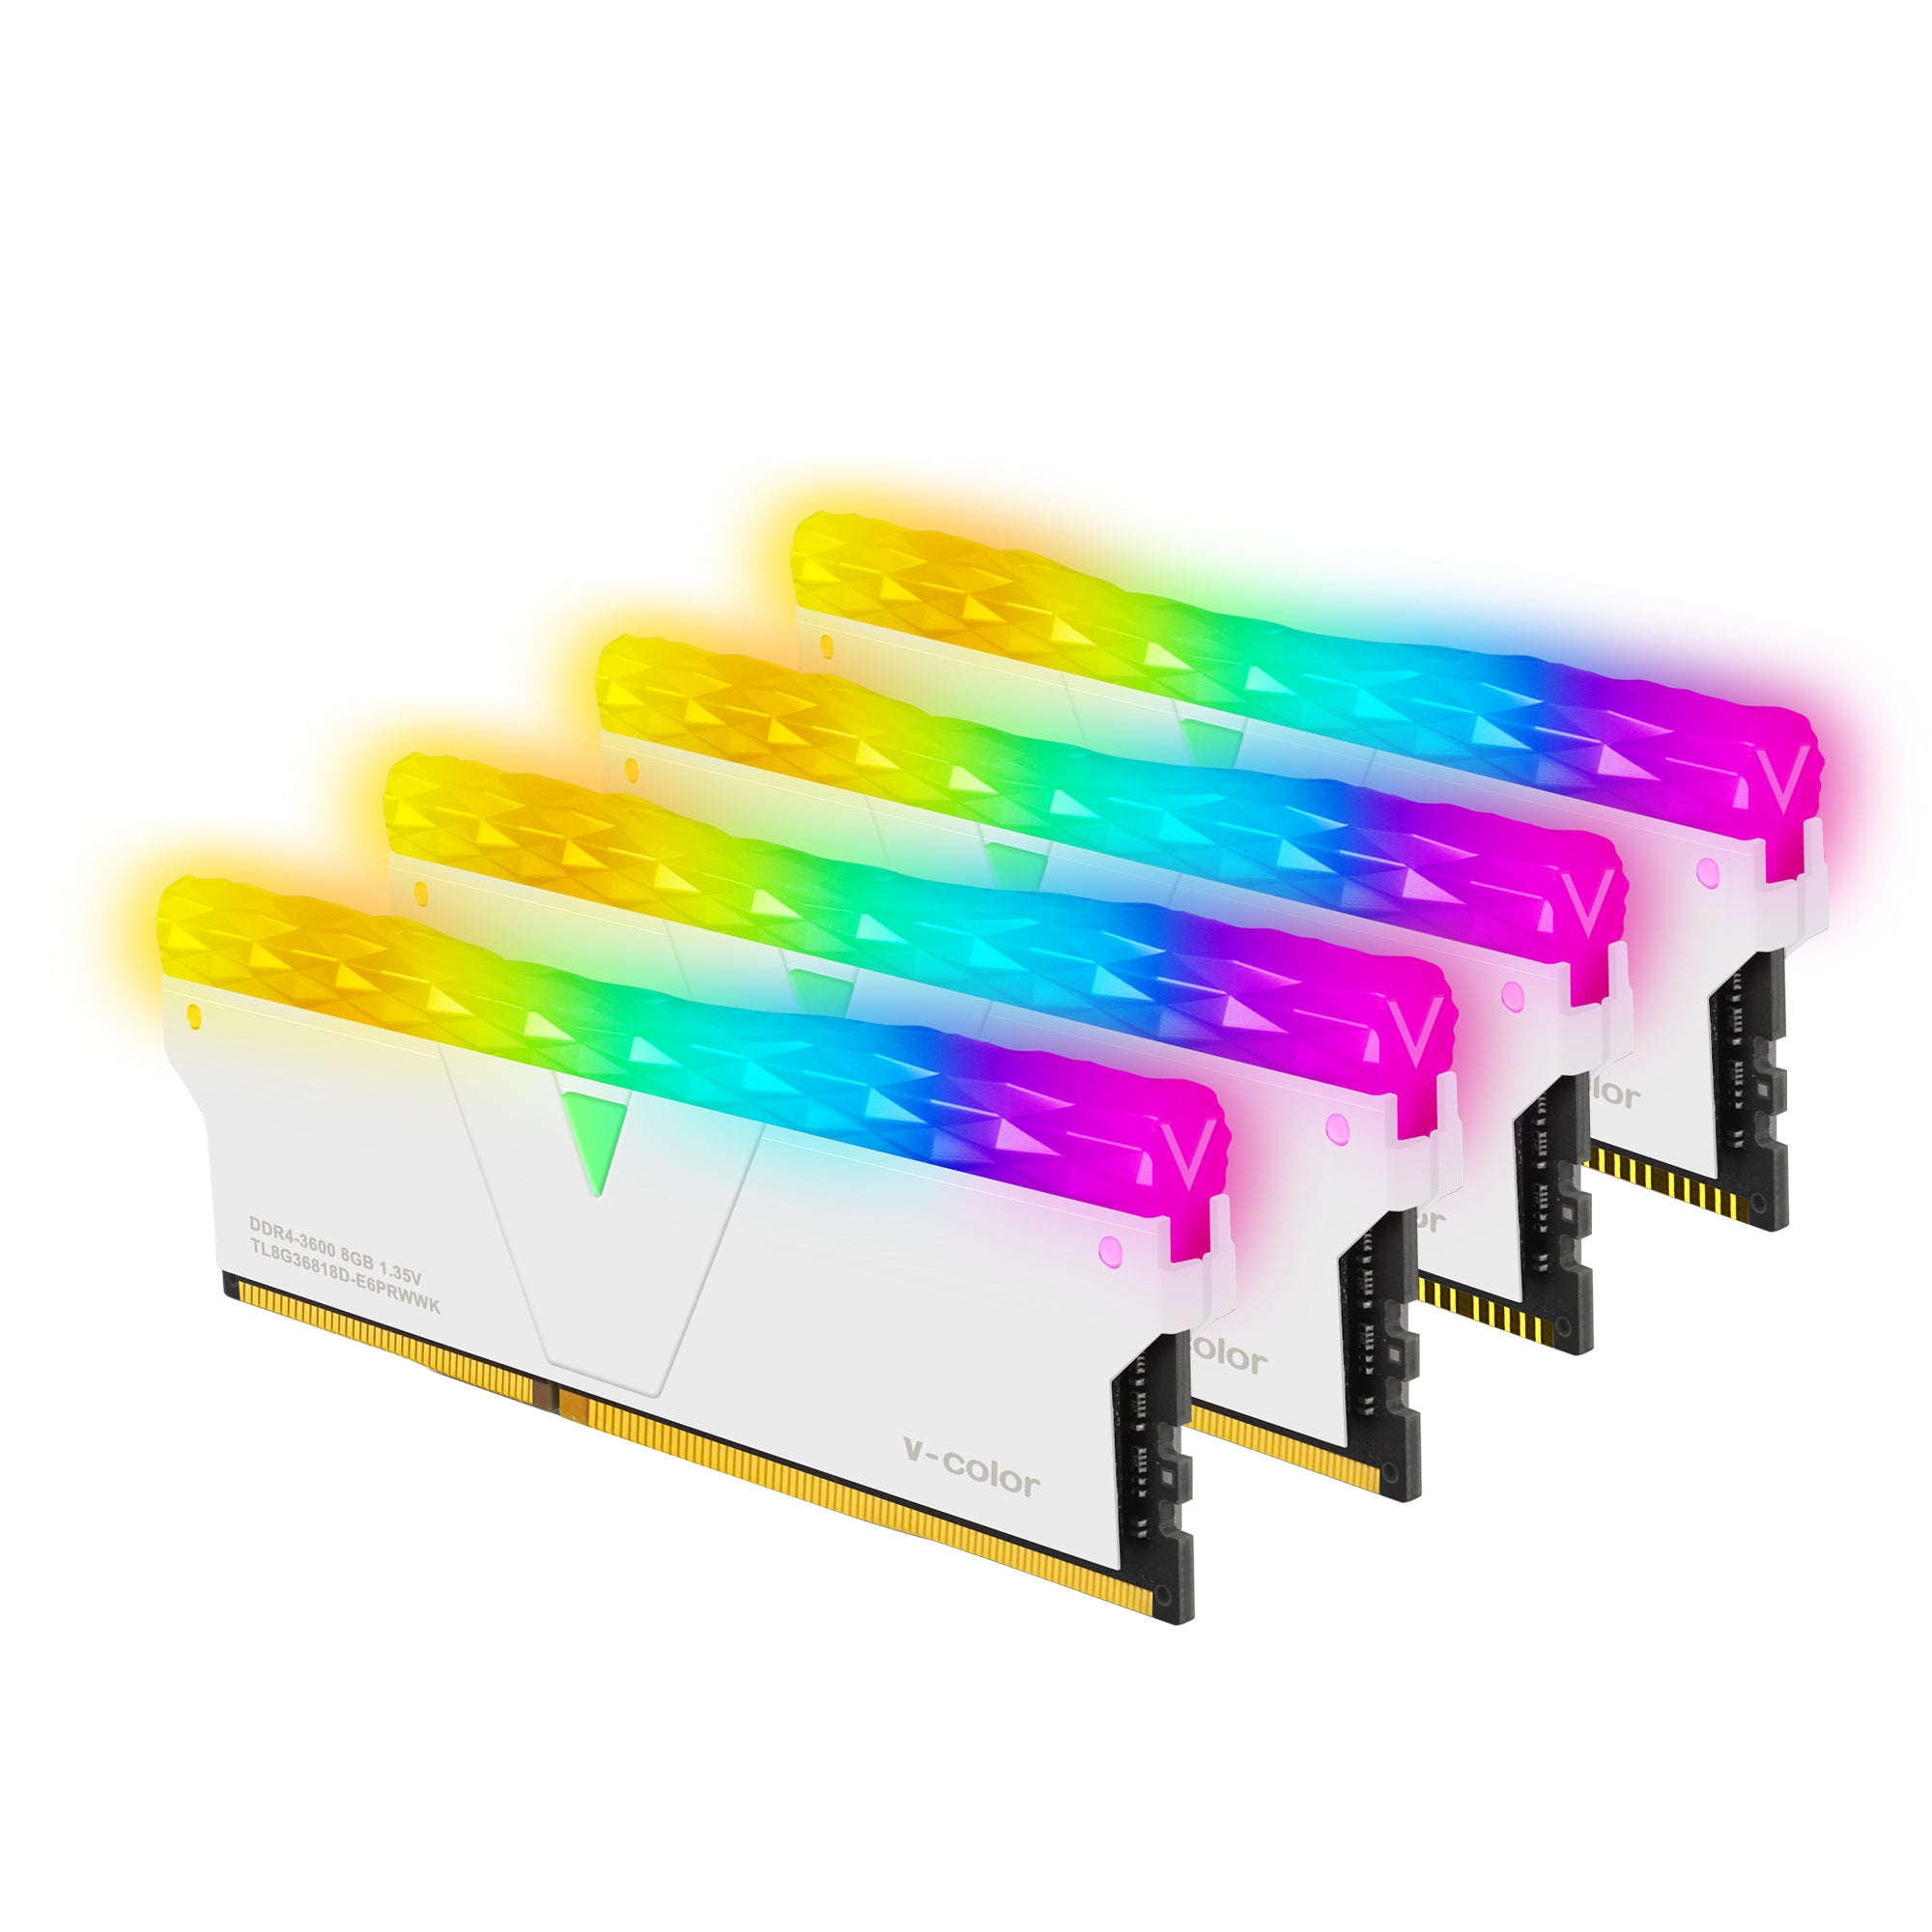 DDR4 | SCC Kit 2+2 Prism Pro RGB | 16GB (8GBx2) | Gaming Memory | U-DI